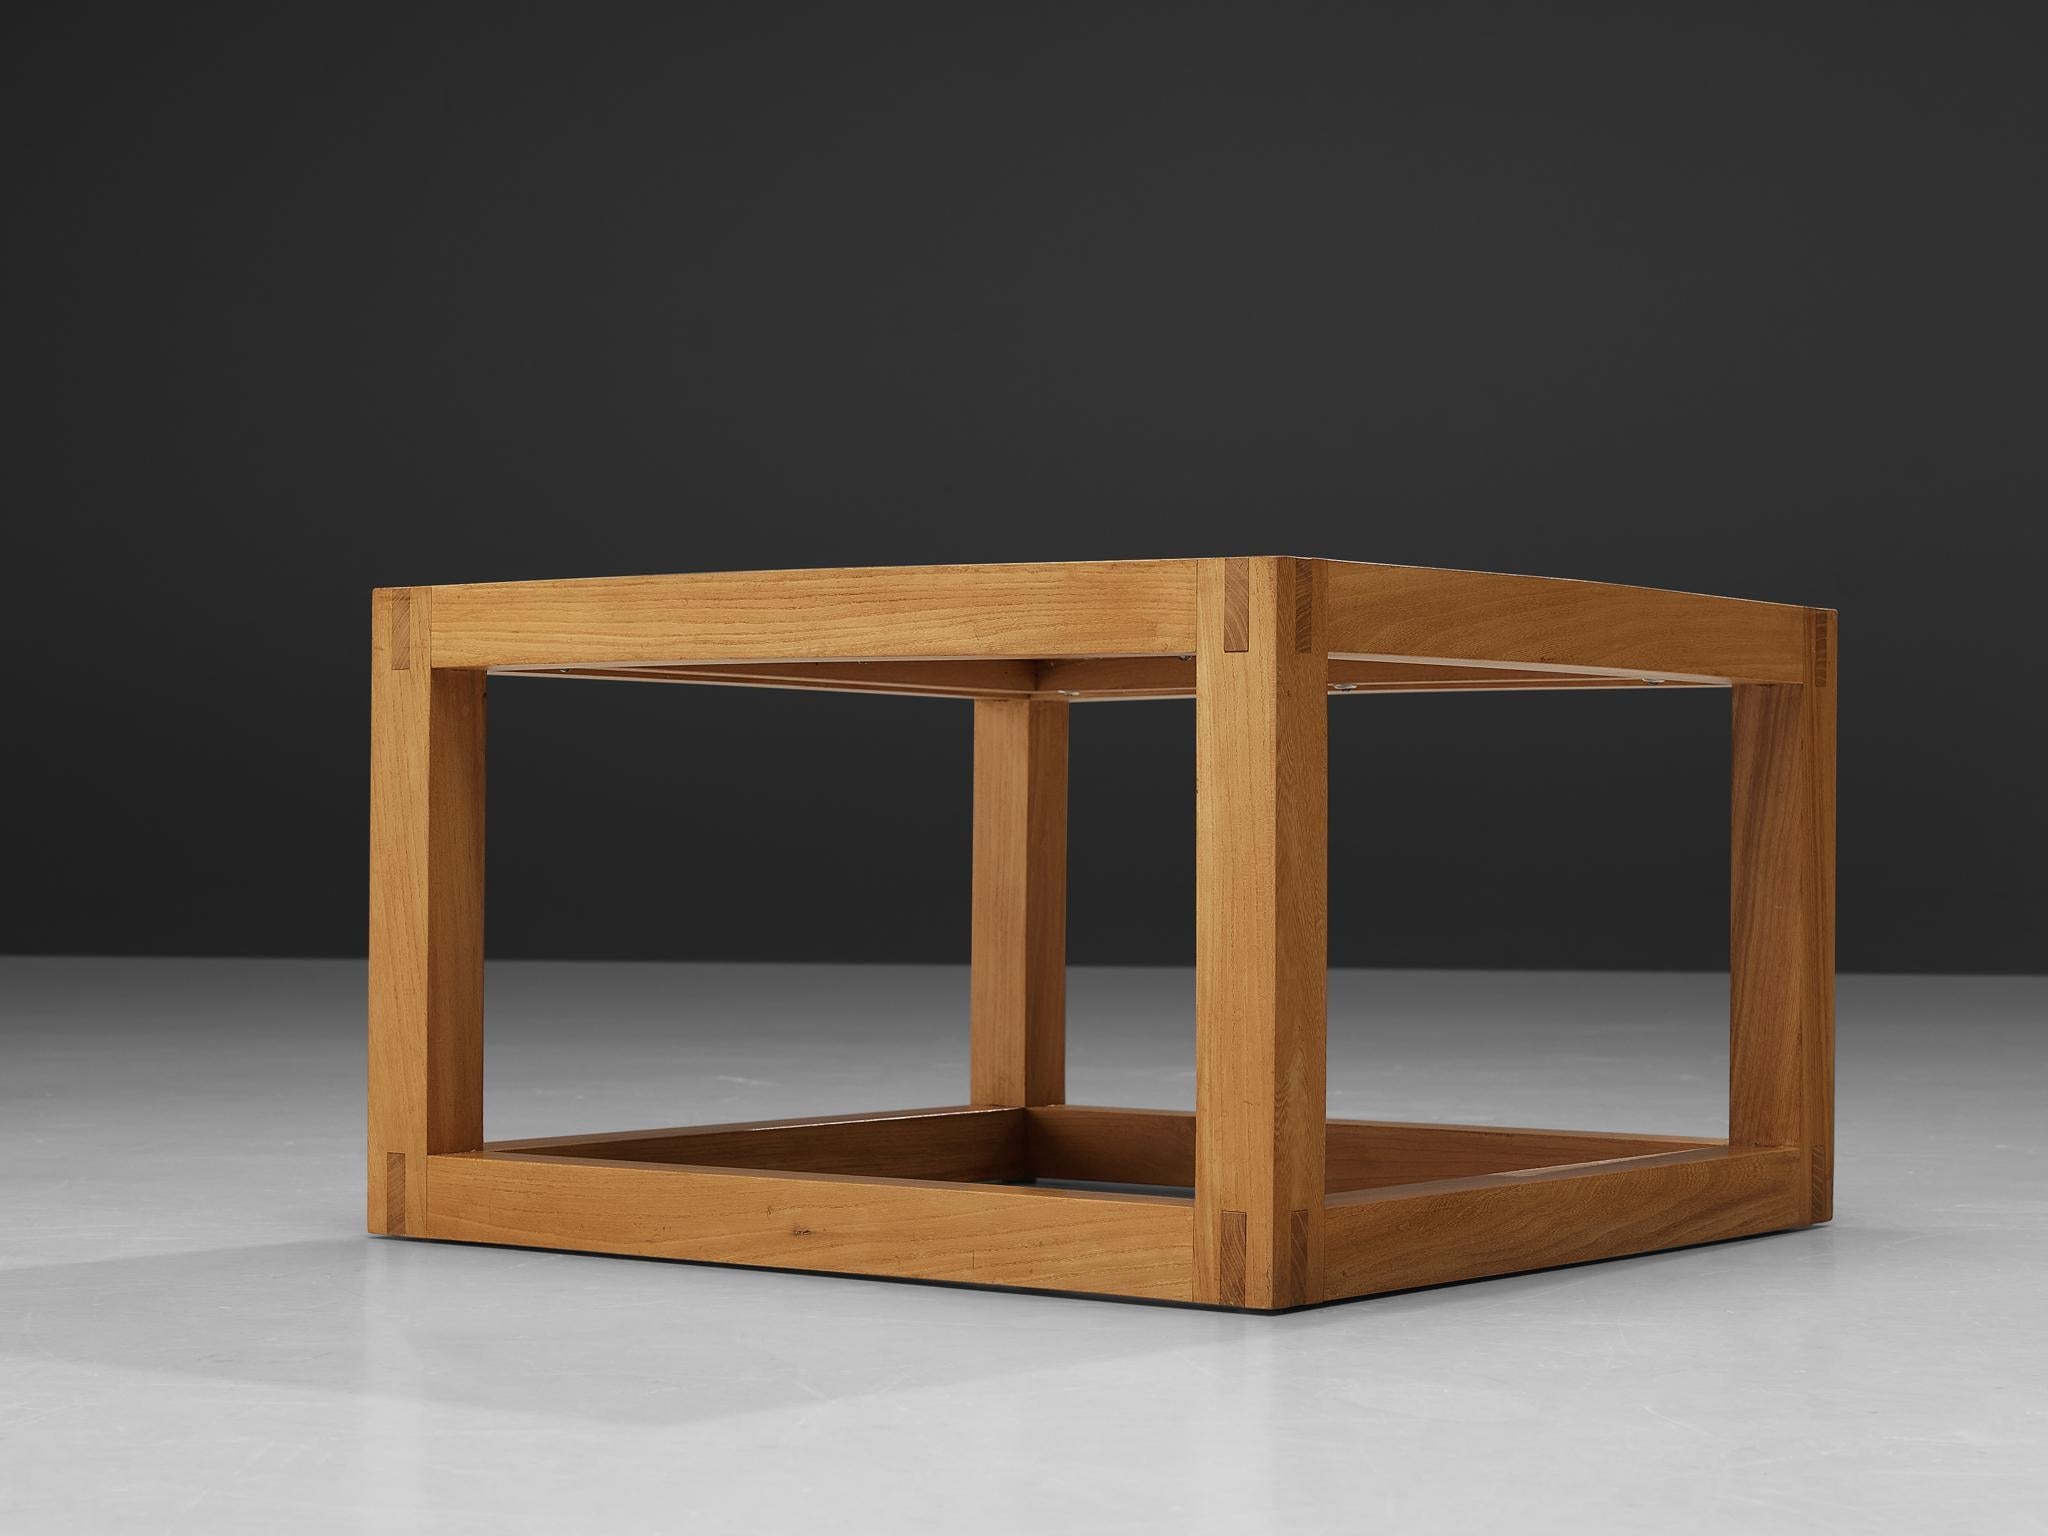 Maison Regain Cubic Side Table in Solid Elm